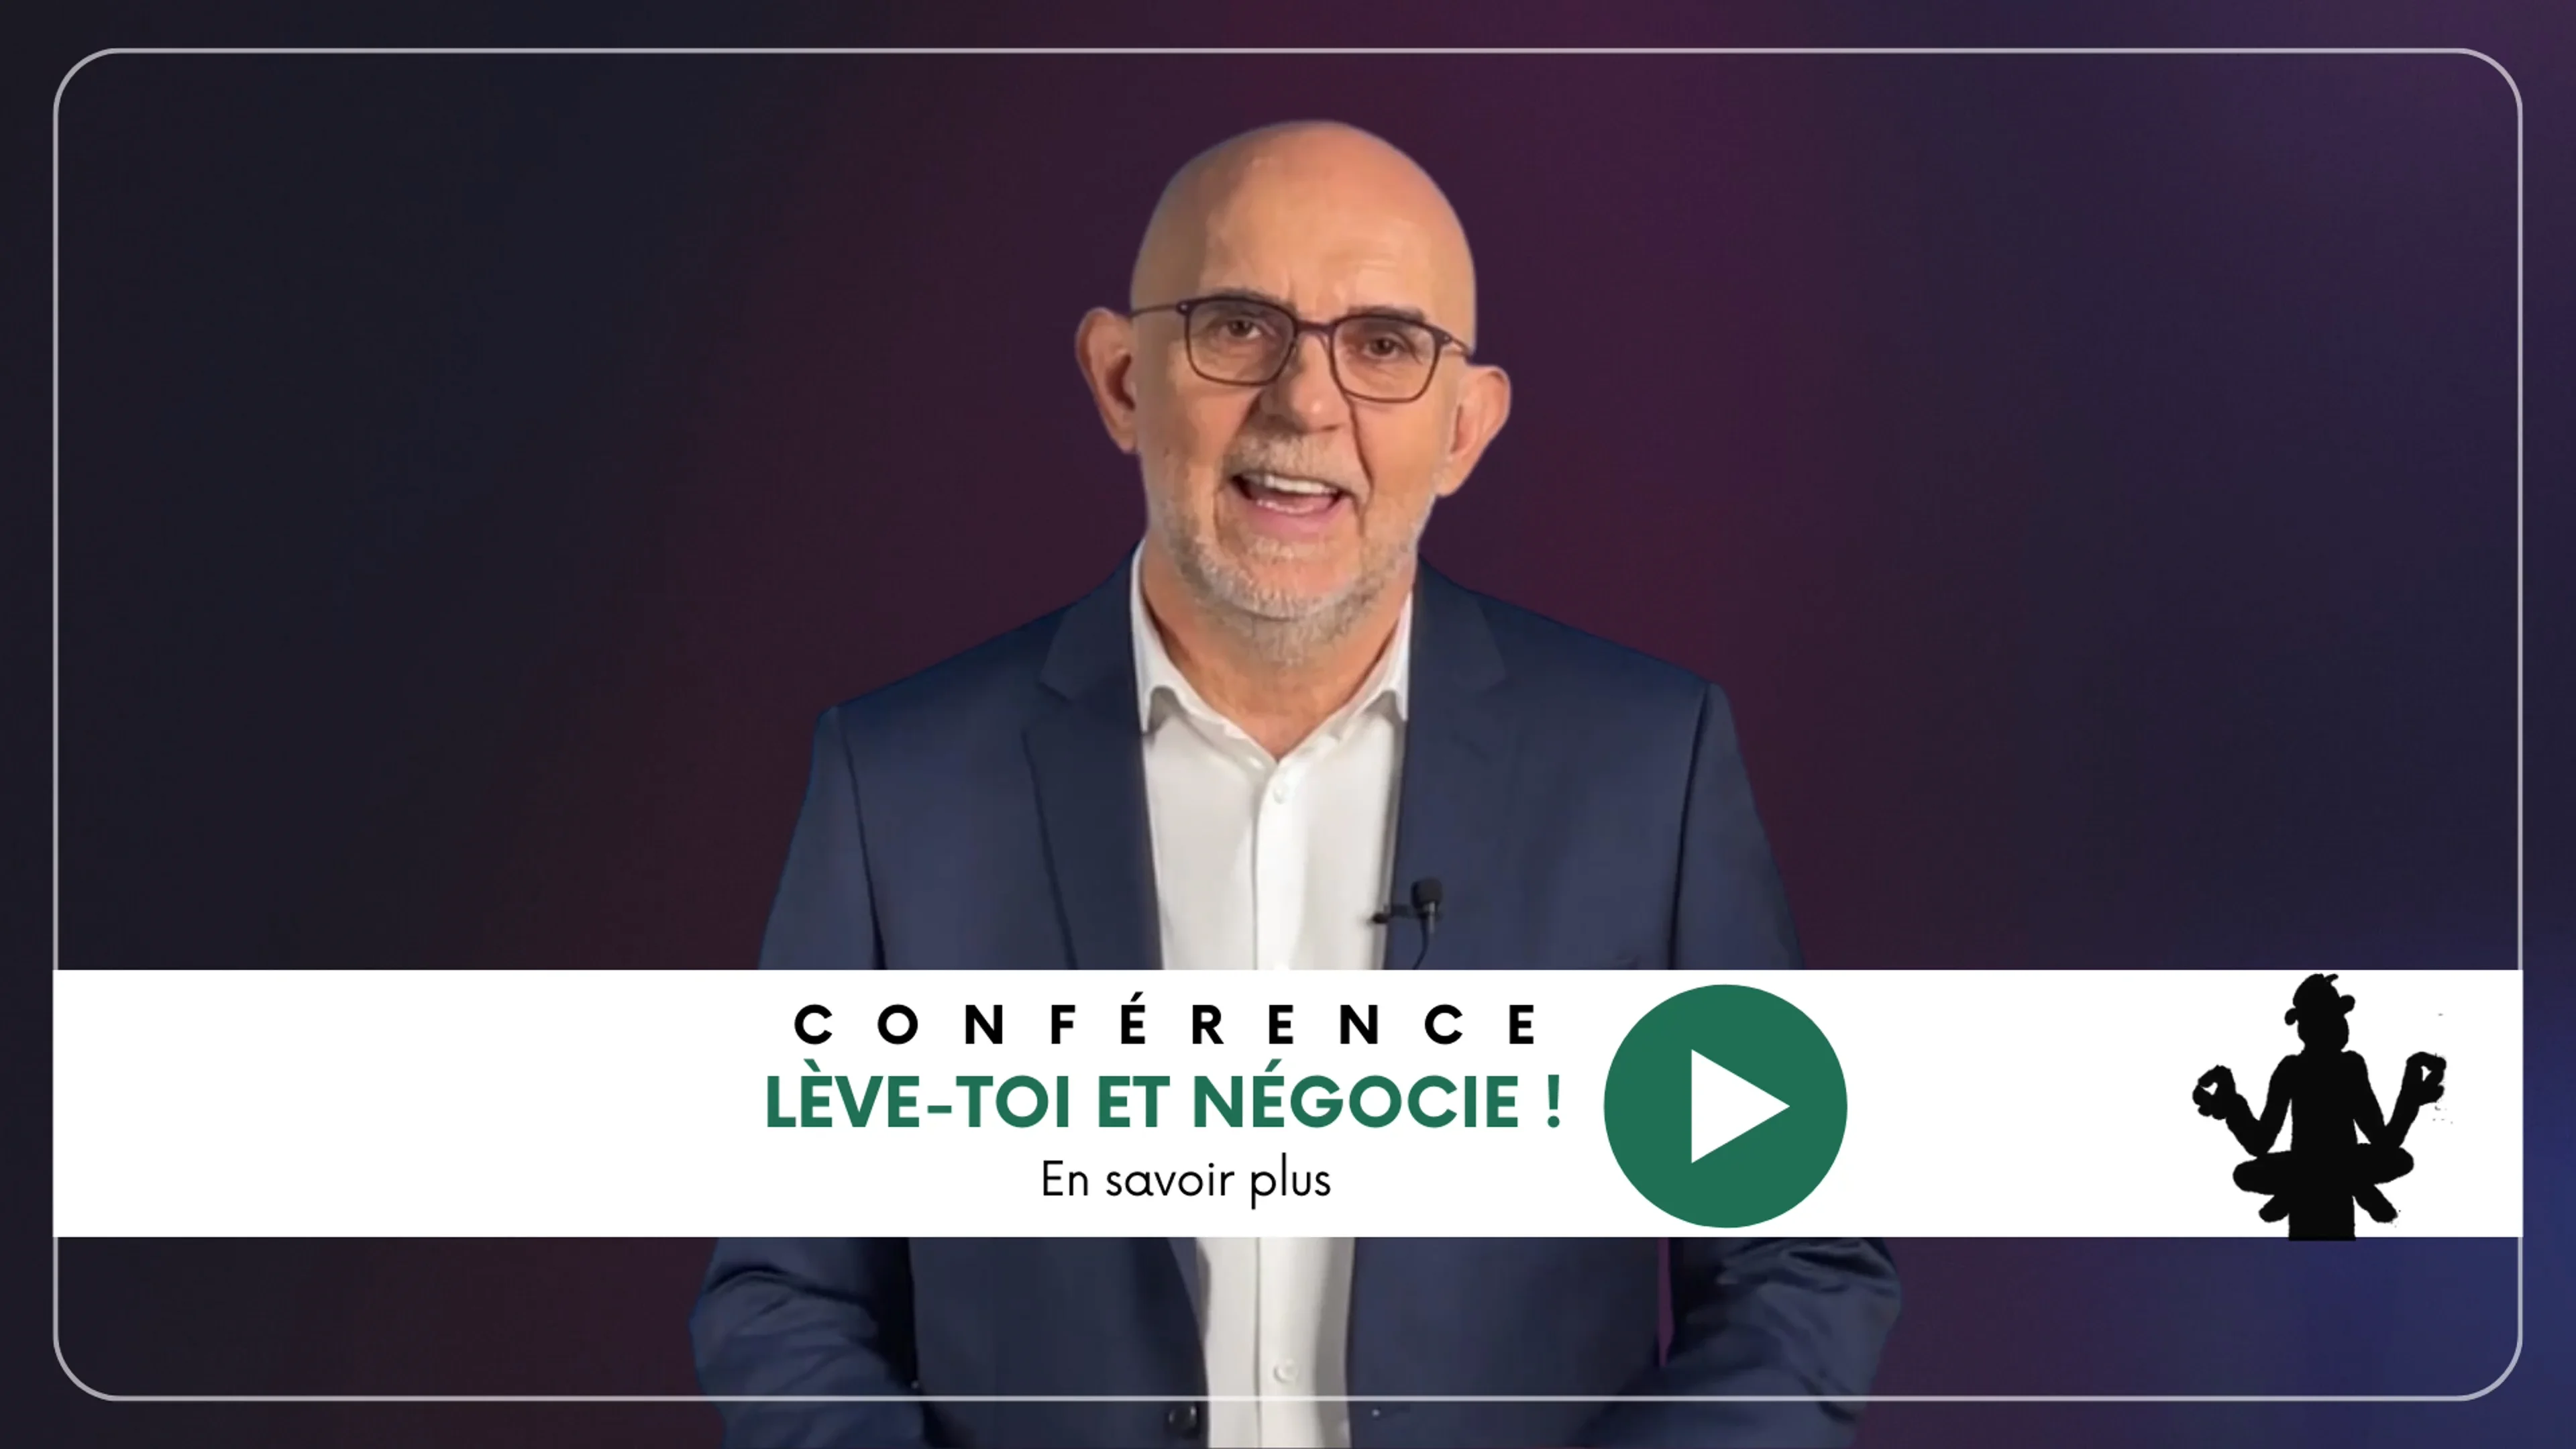 conference leve-toi et prospecte on Vimeo